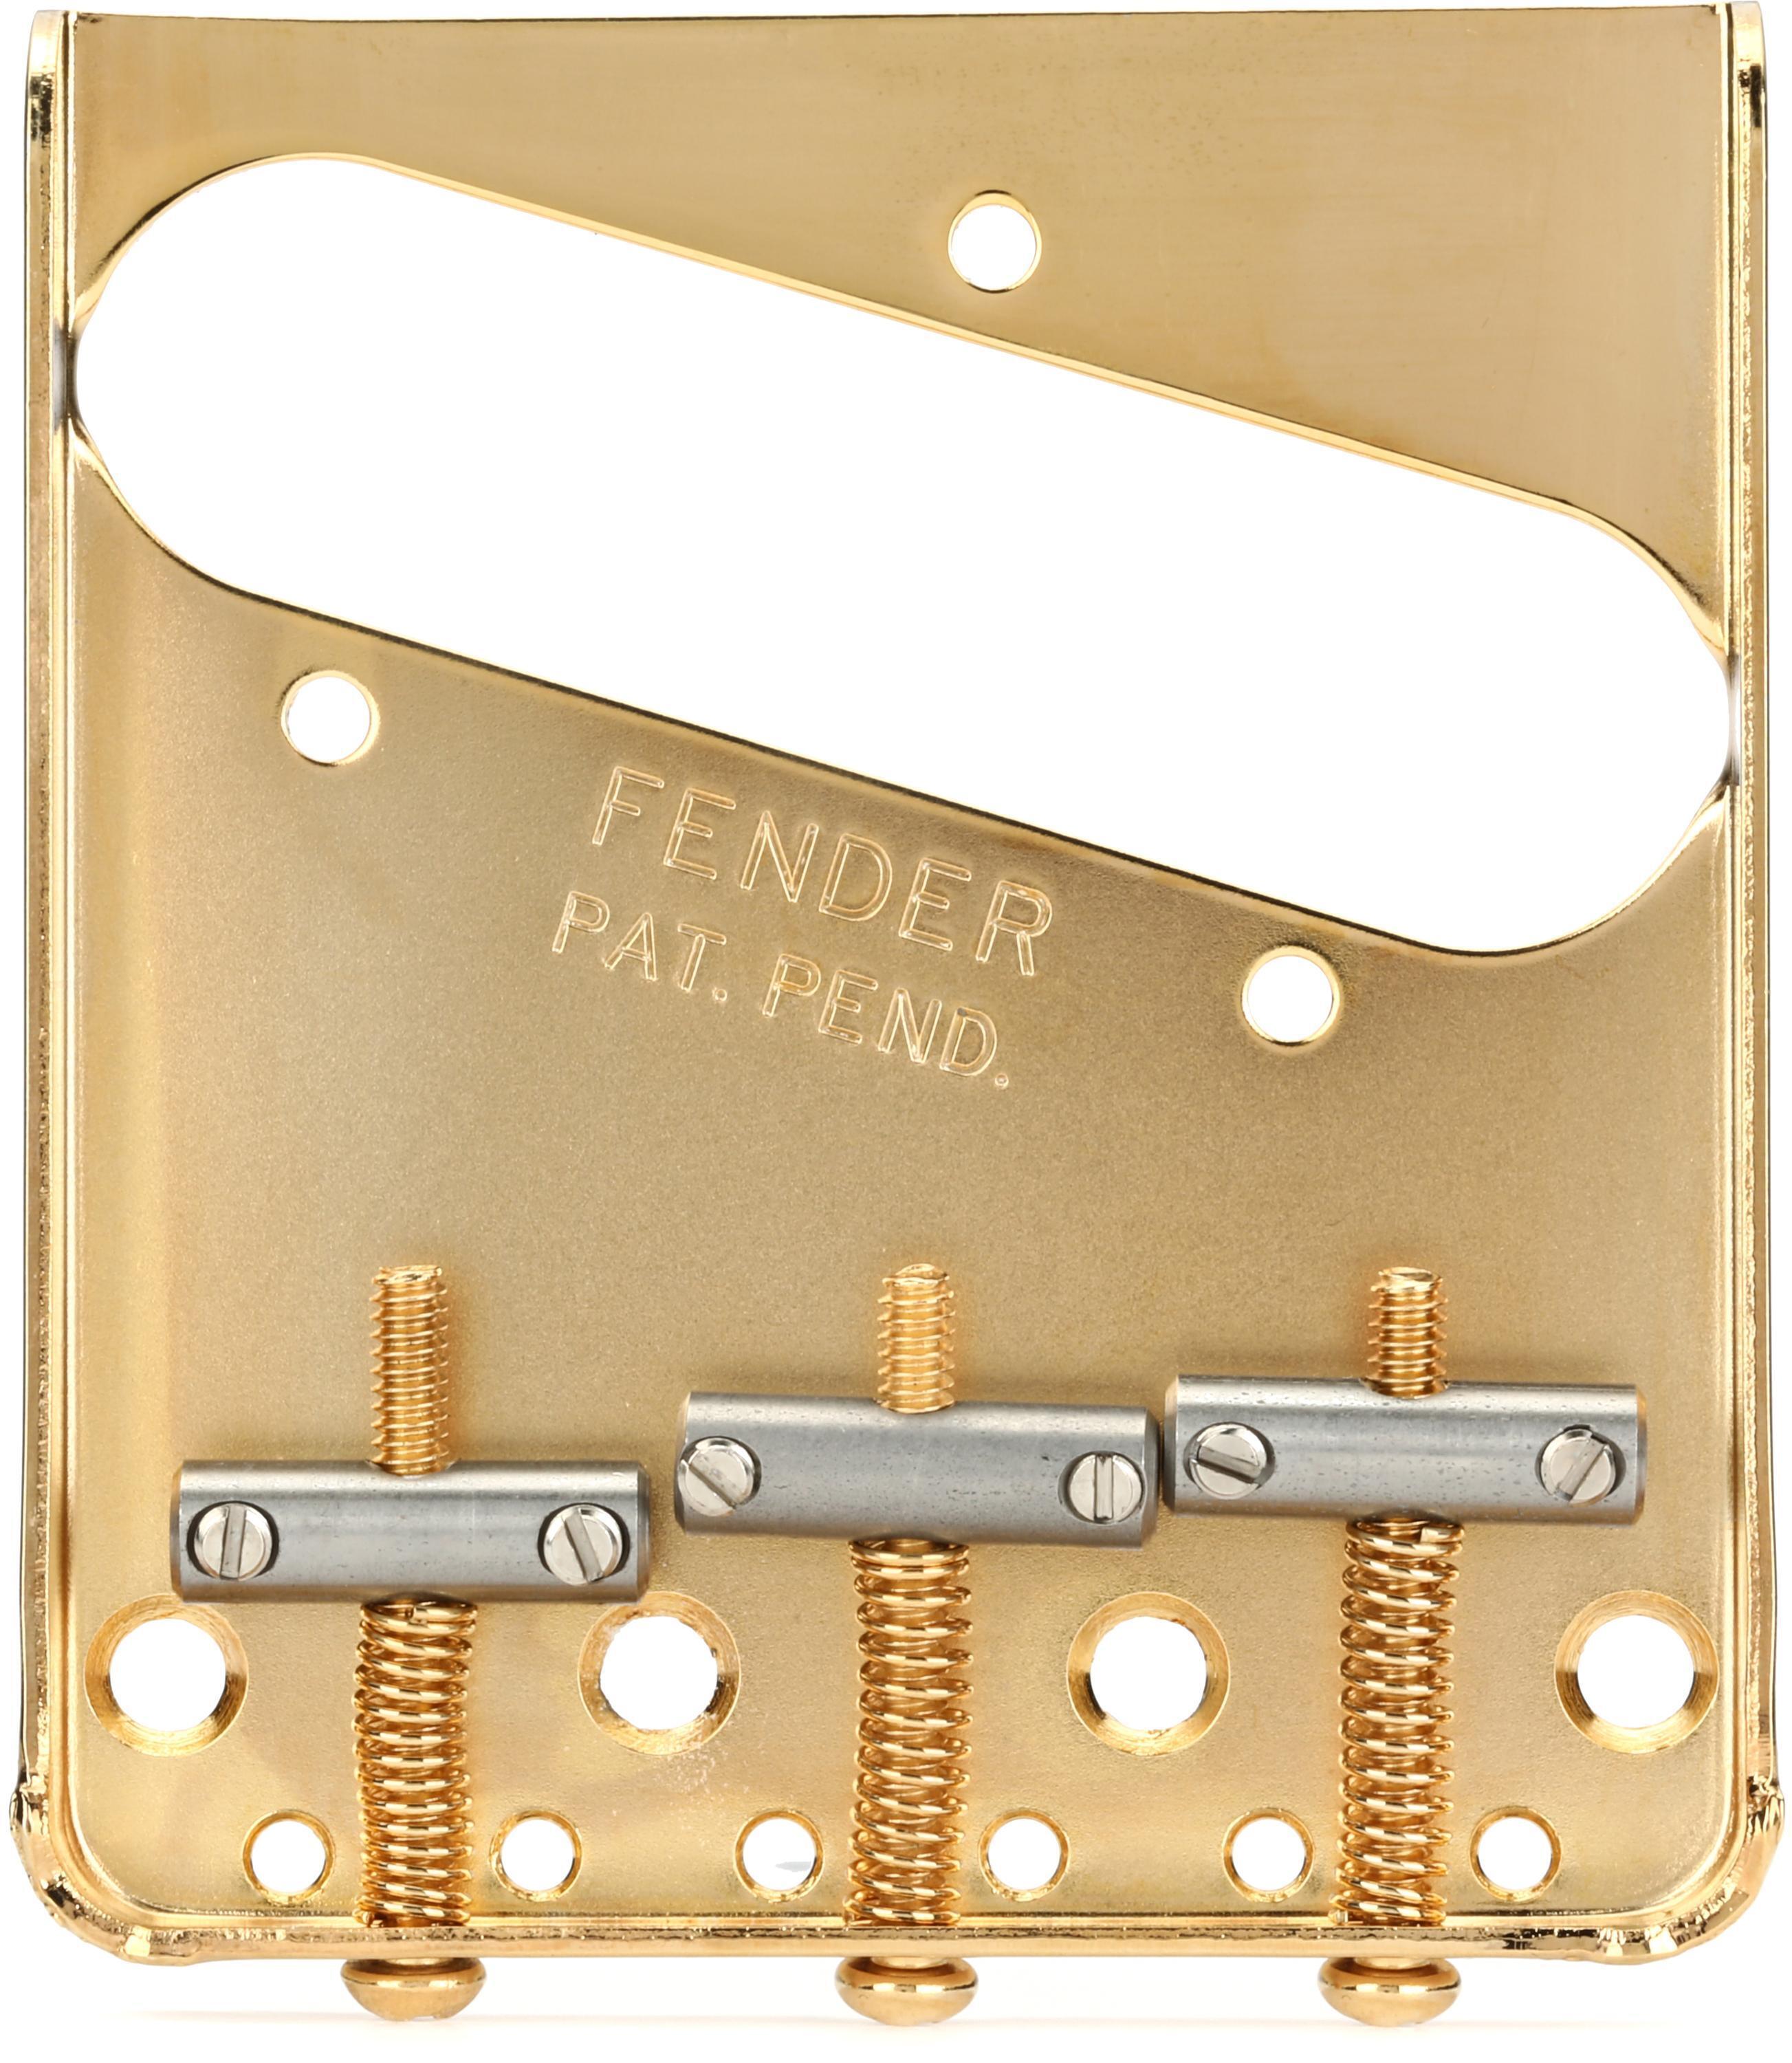 Fender American Vintage Telecaster Bridge - Gold